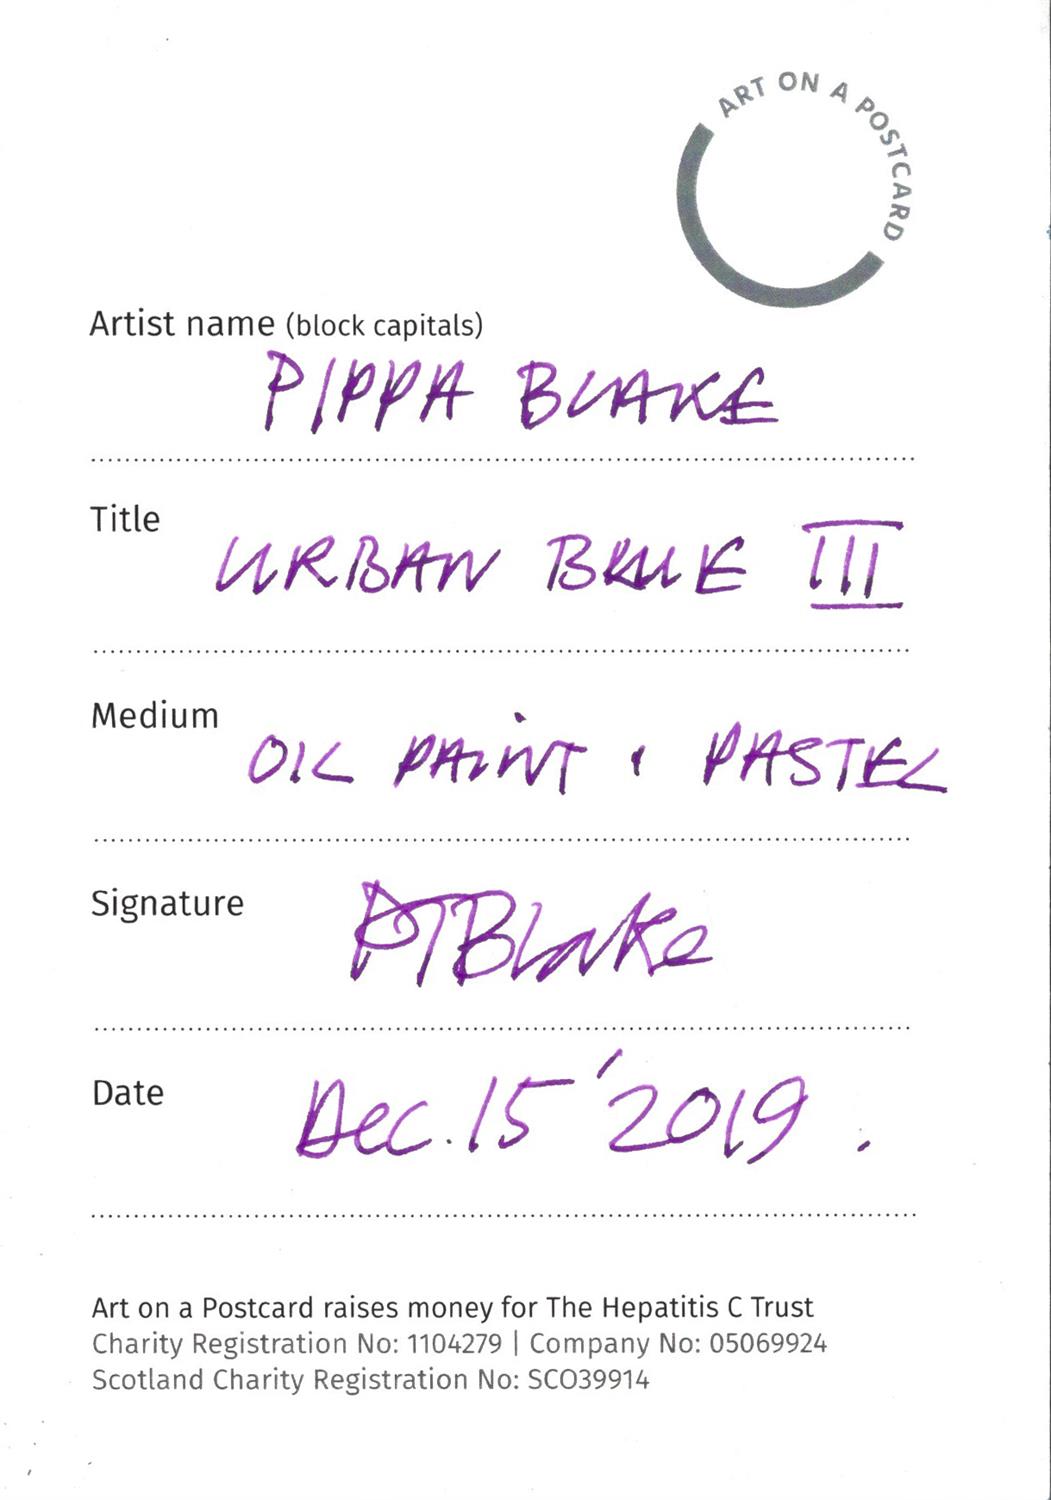 Pippa Blake, Urban Blue III, 2019 - Image 3 of 3